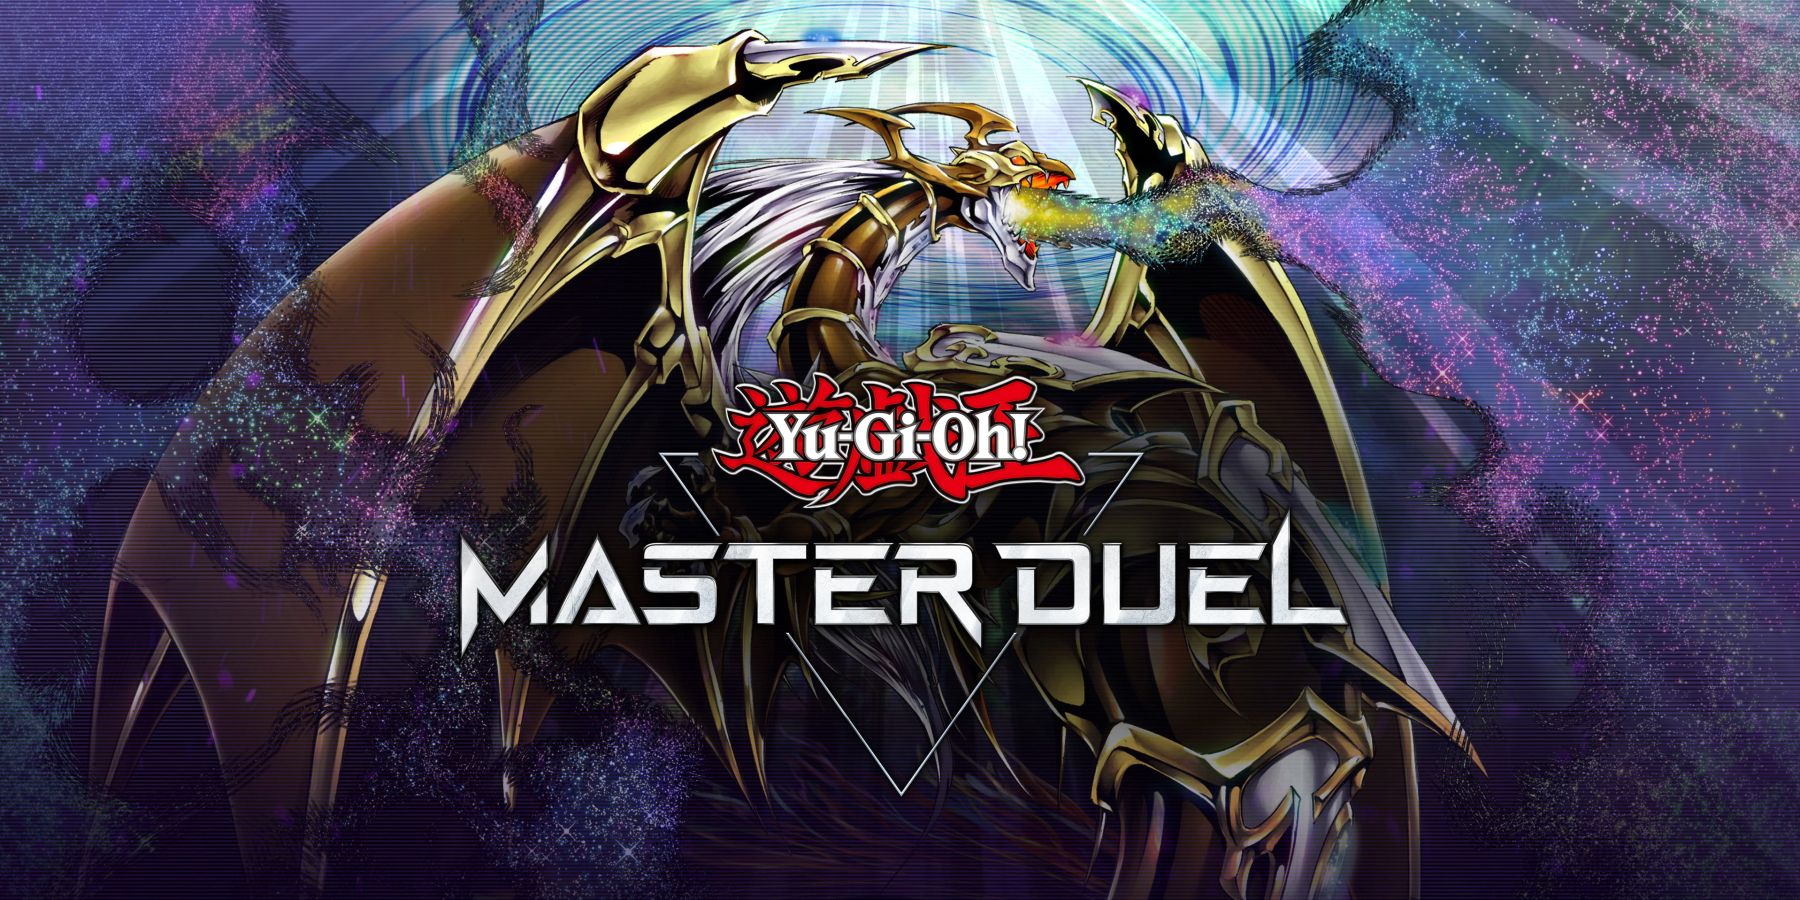 yugioh-master-duel-player-milestone-4-million